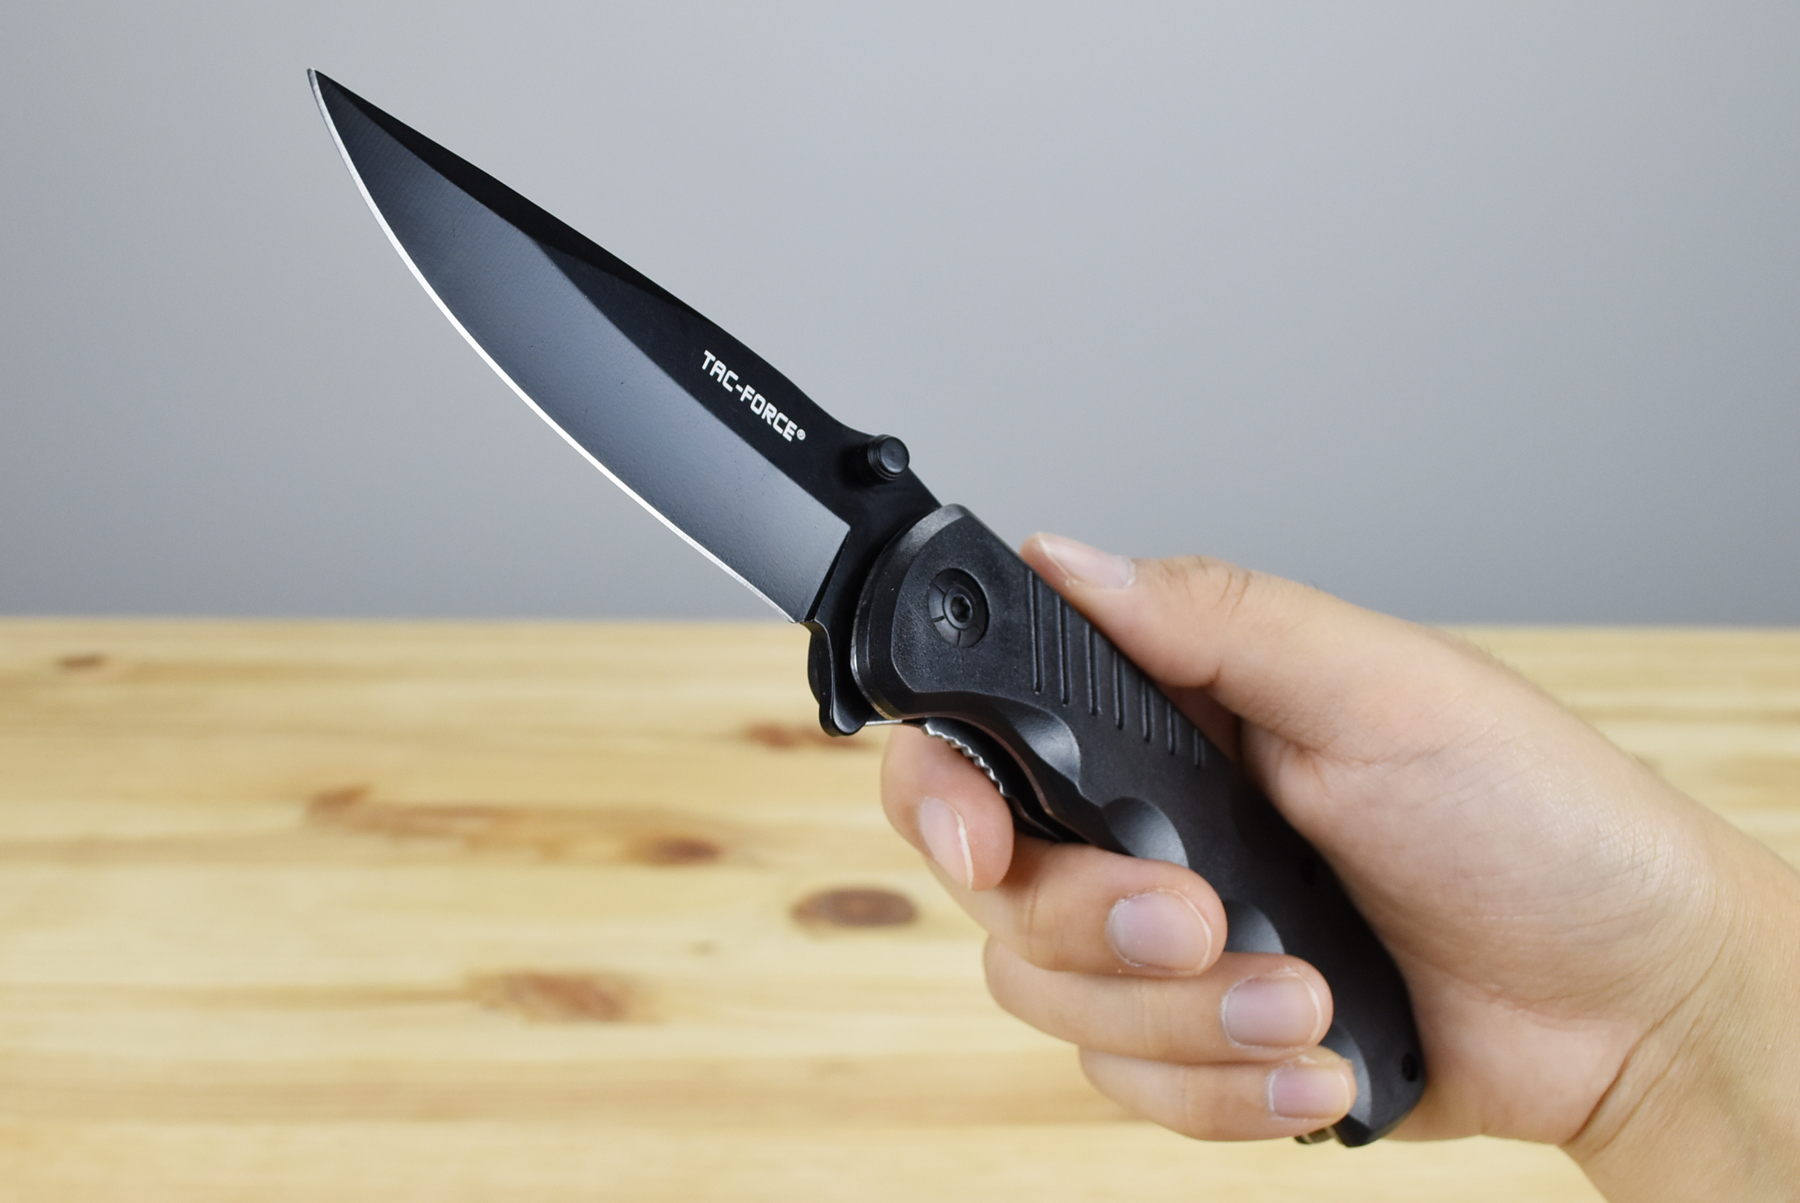 Tac Force 764 Assisted EDC Folding Knife (Black Handle)